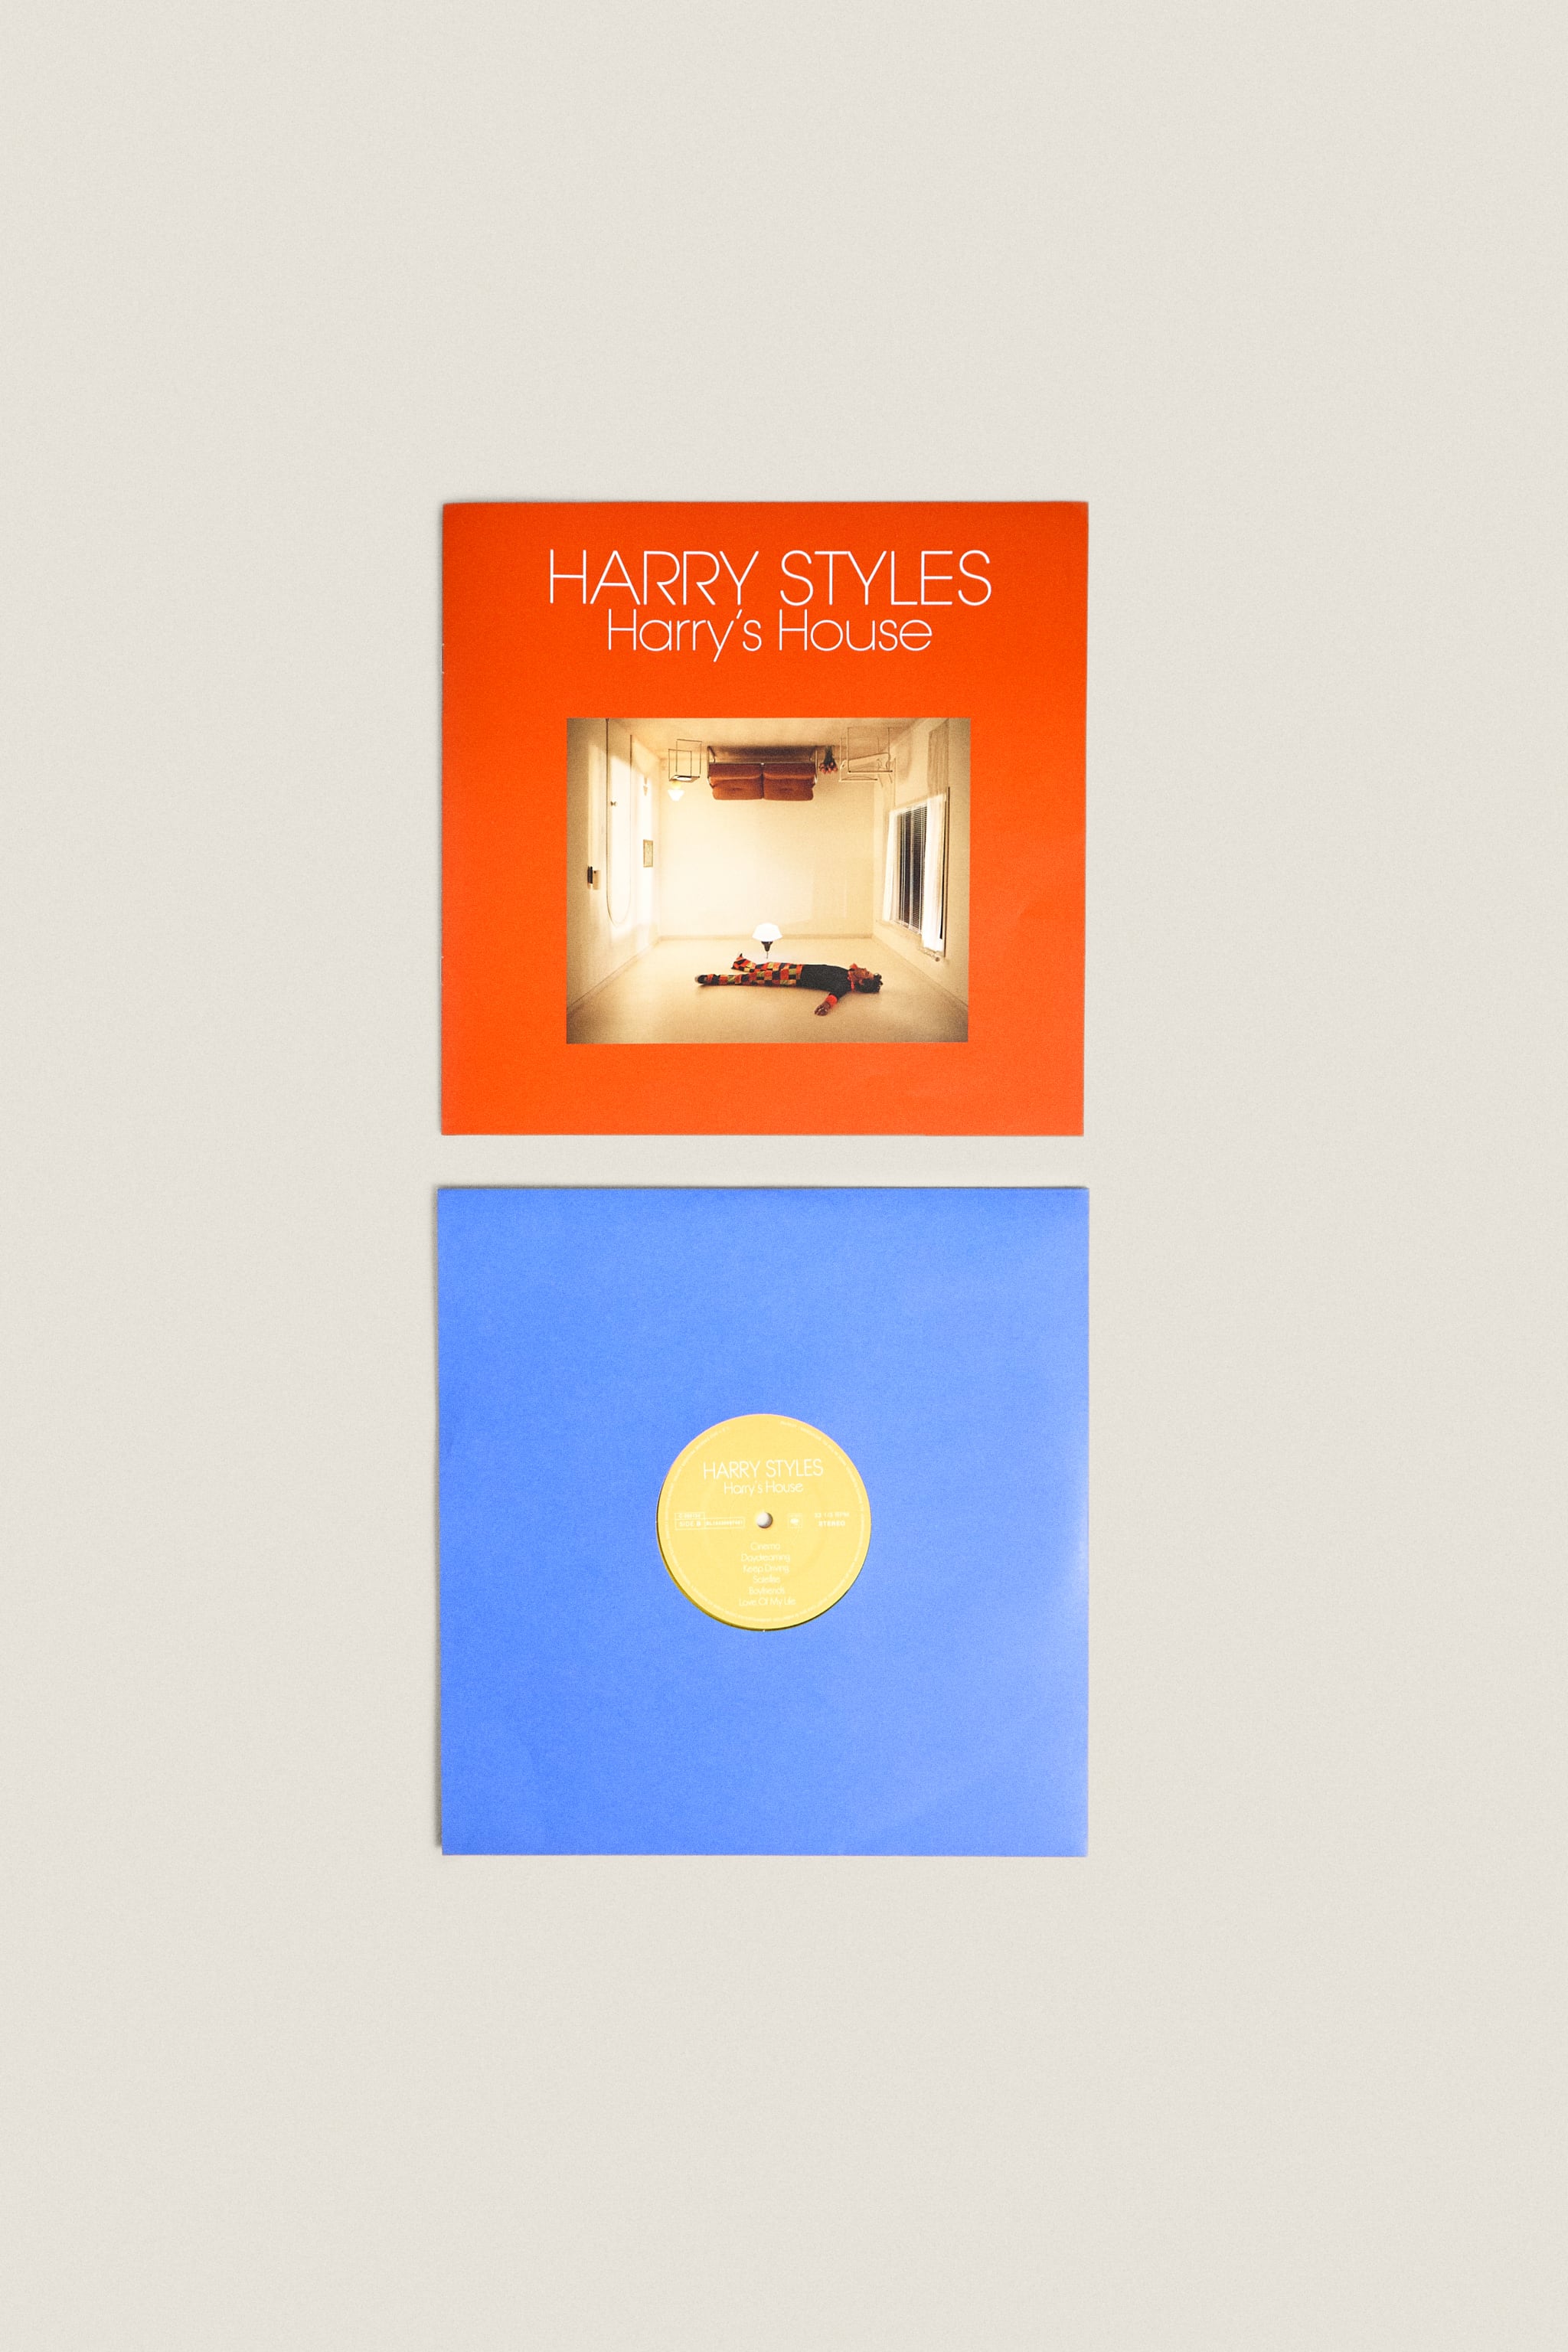 HARRY STYLES: HARRY'S HOUSE VINYL RECORD